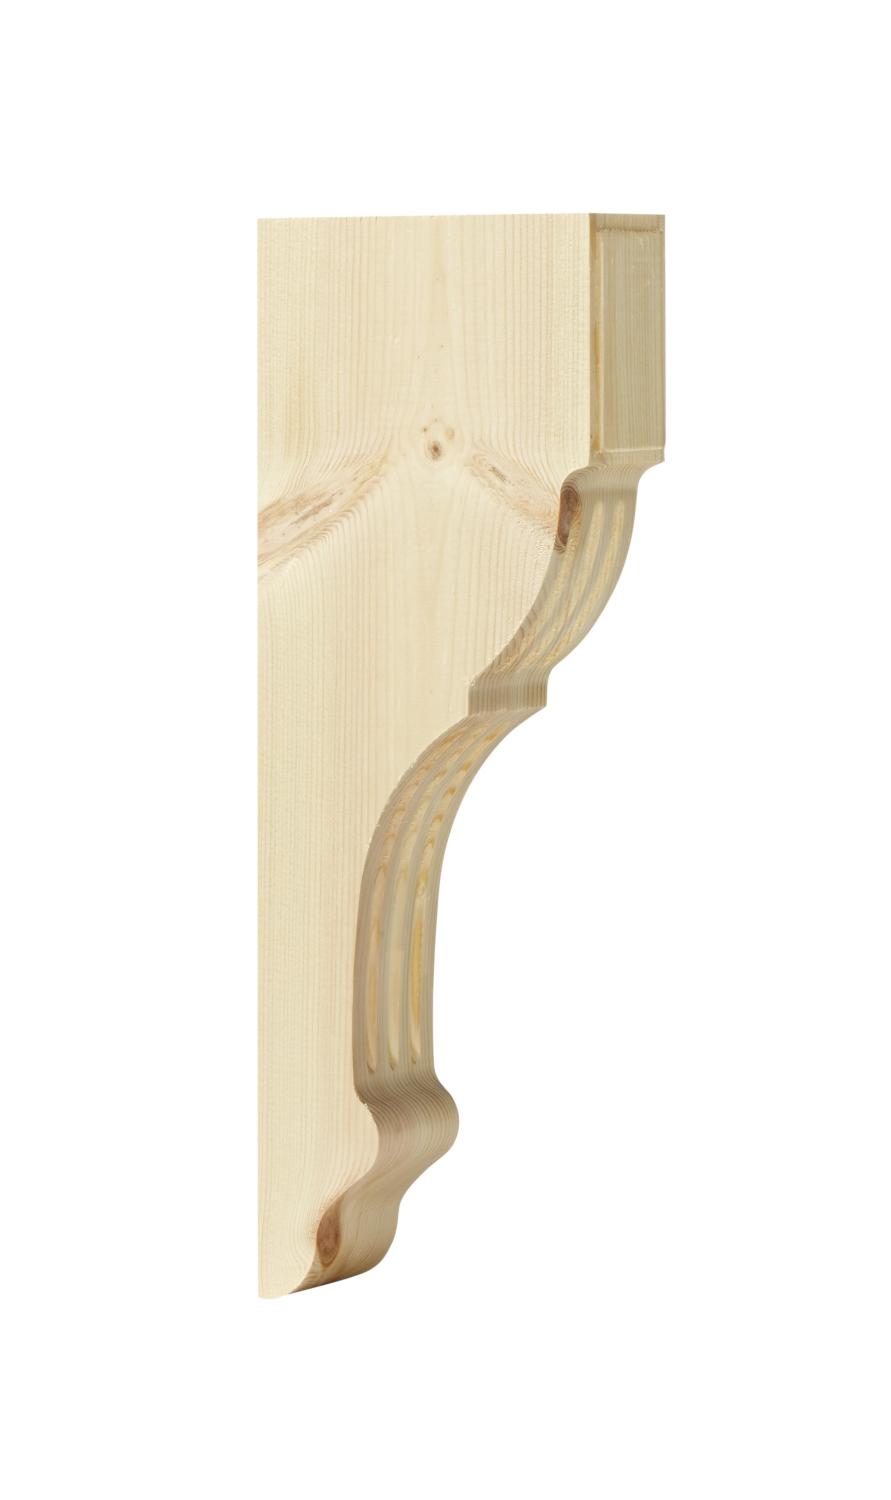 Old-fashioned wooden shelf bracket in pine - Model 302 - Wooden bracket in vintage style for shelving - old style